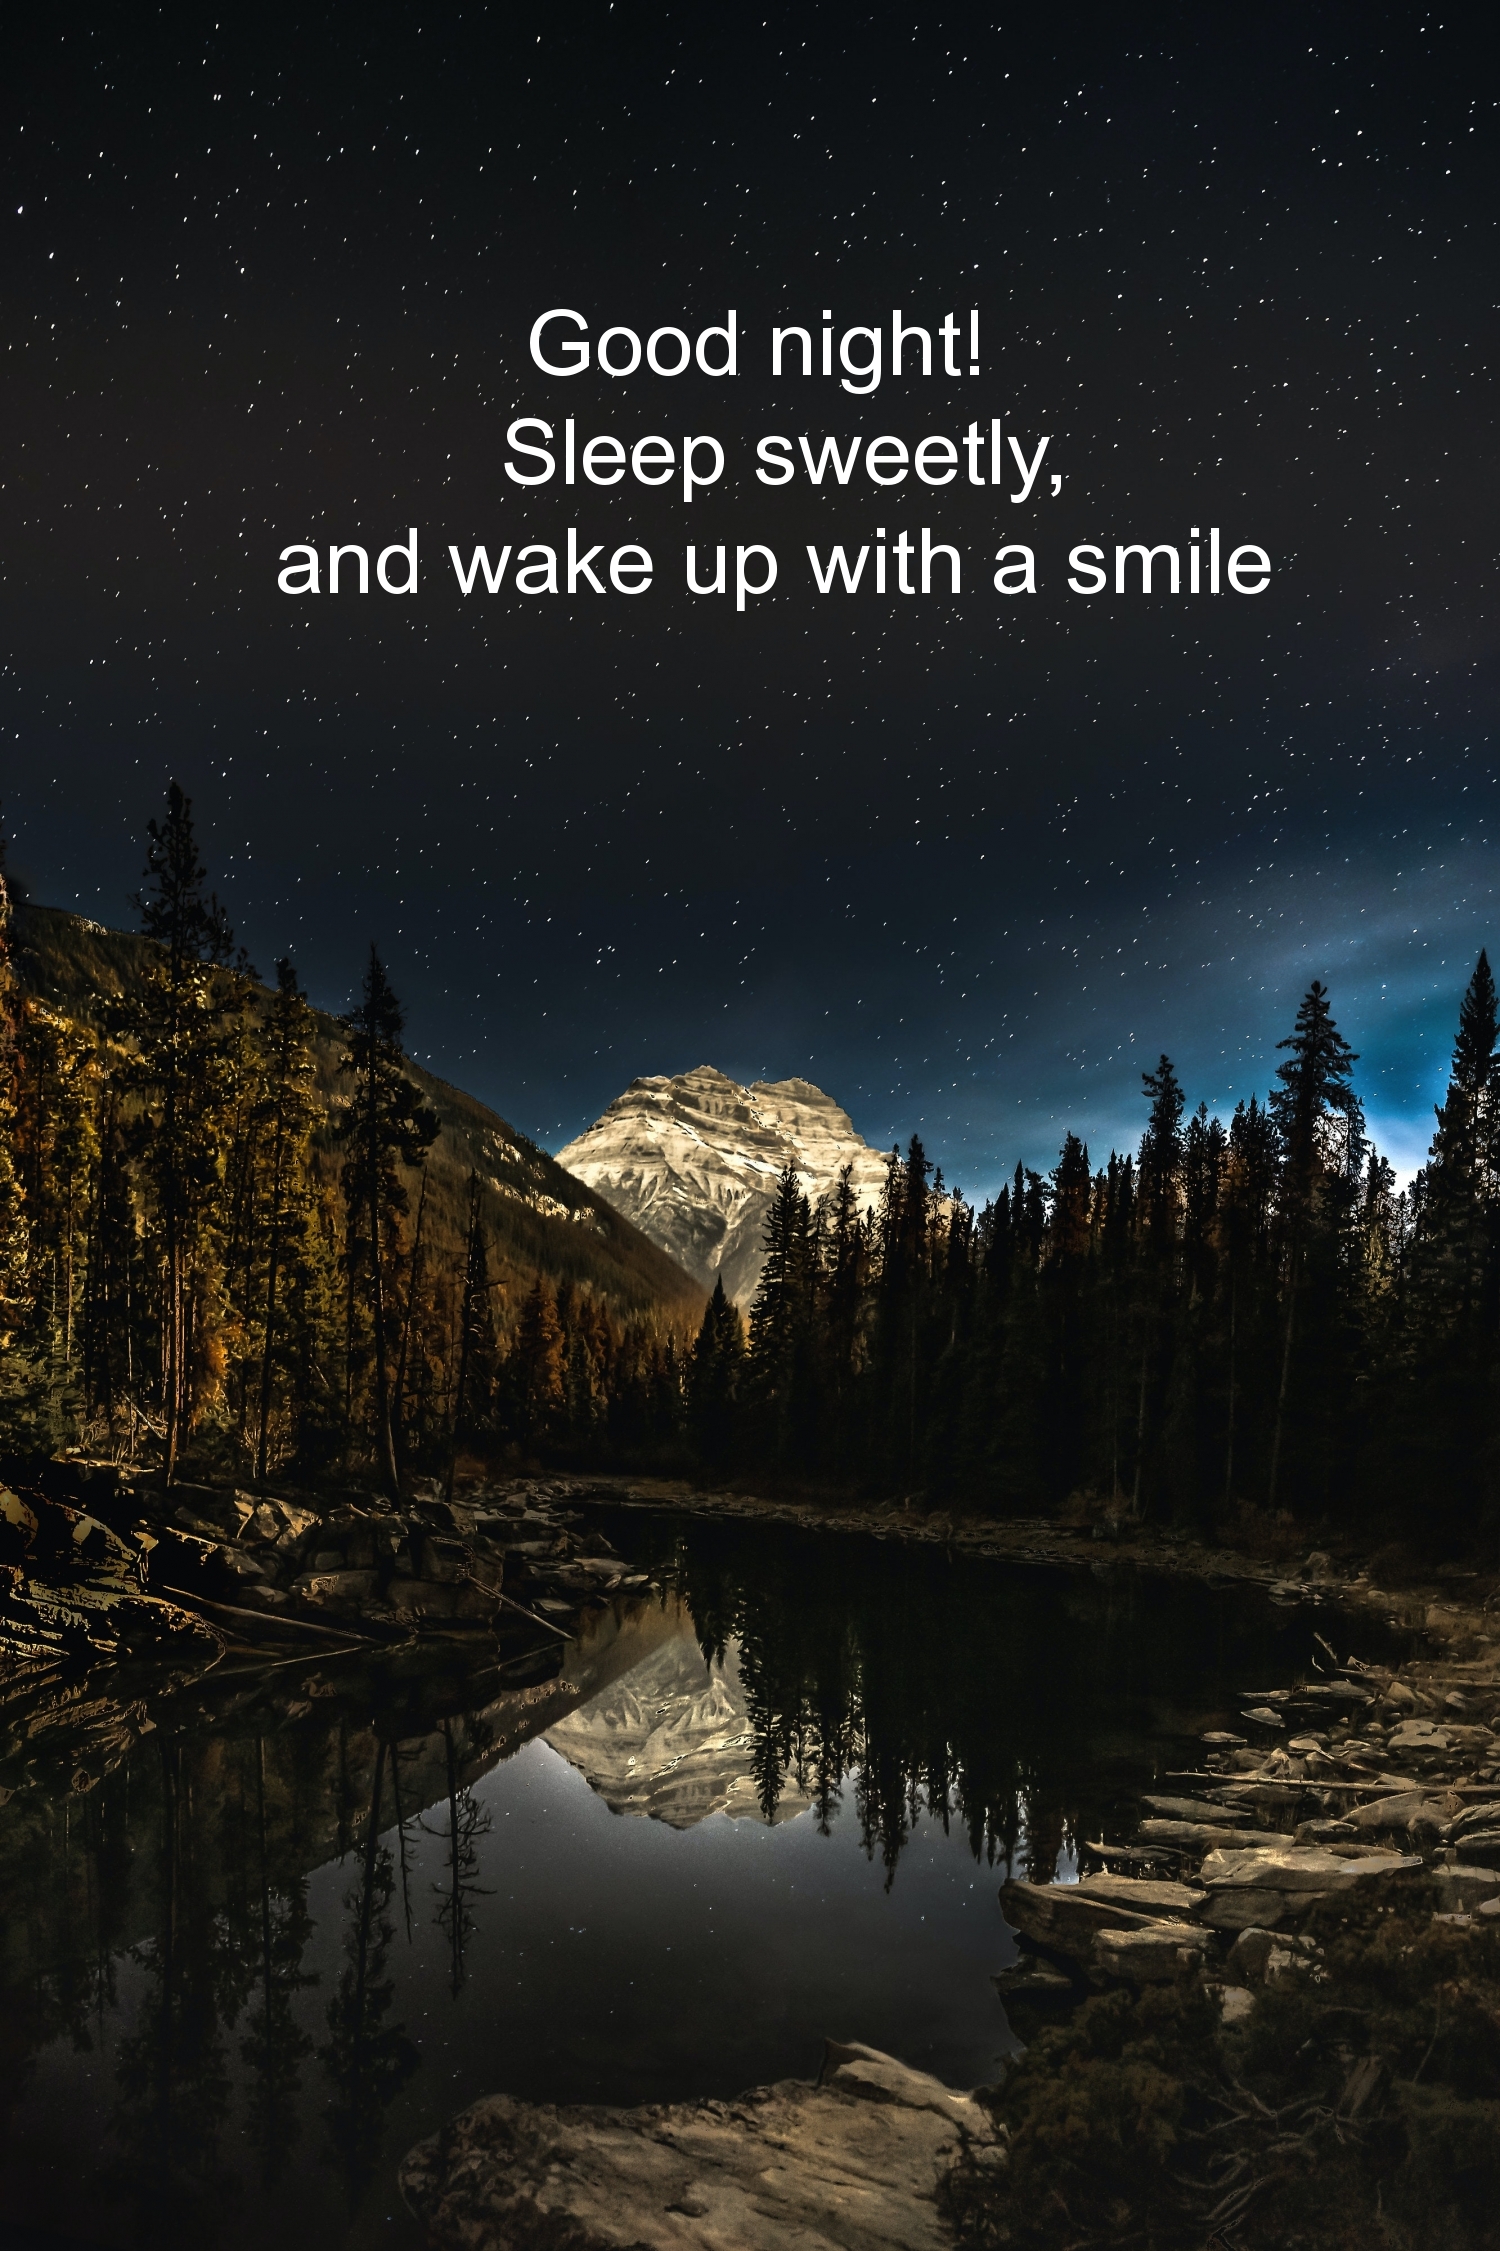 Good night! Sleep sweetly, and wake up with a smile